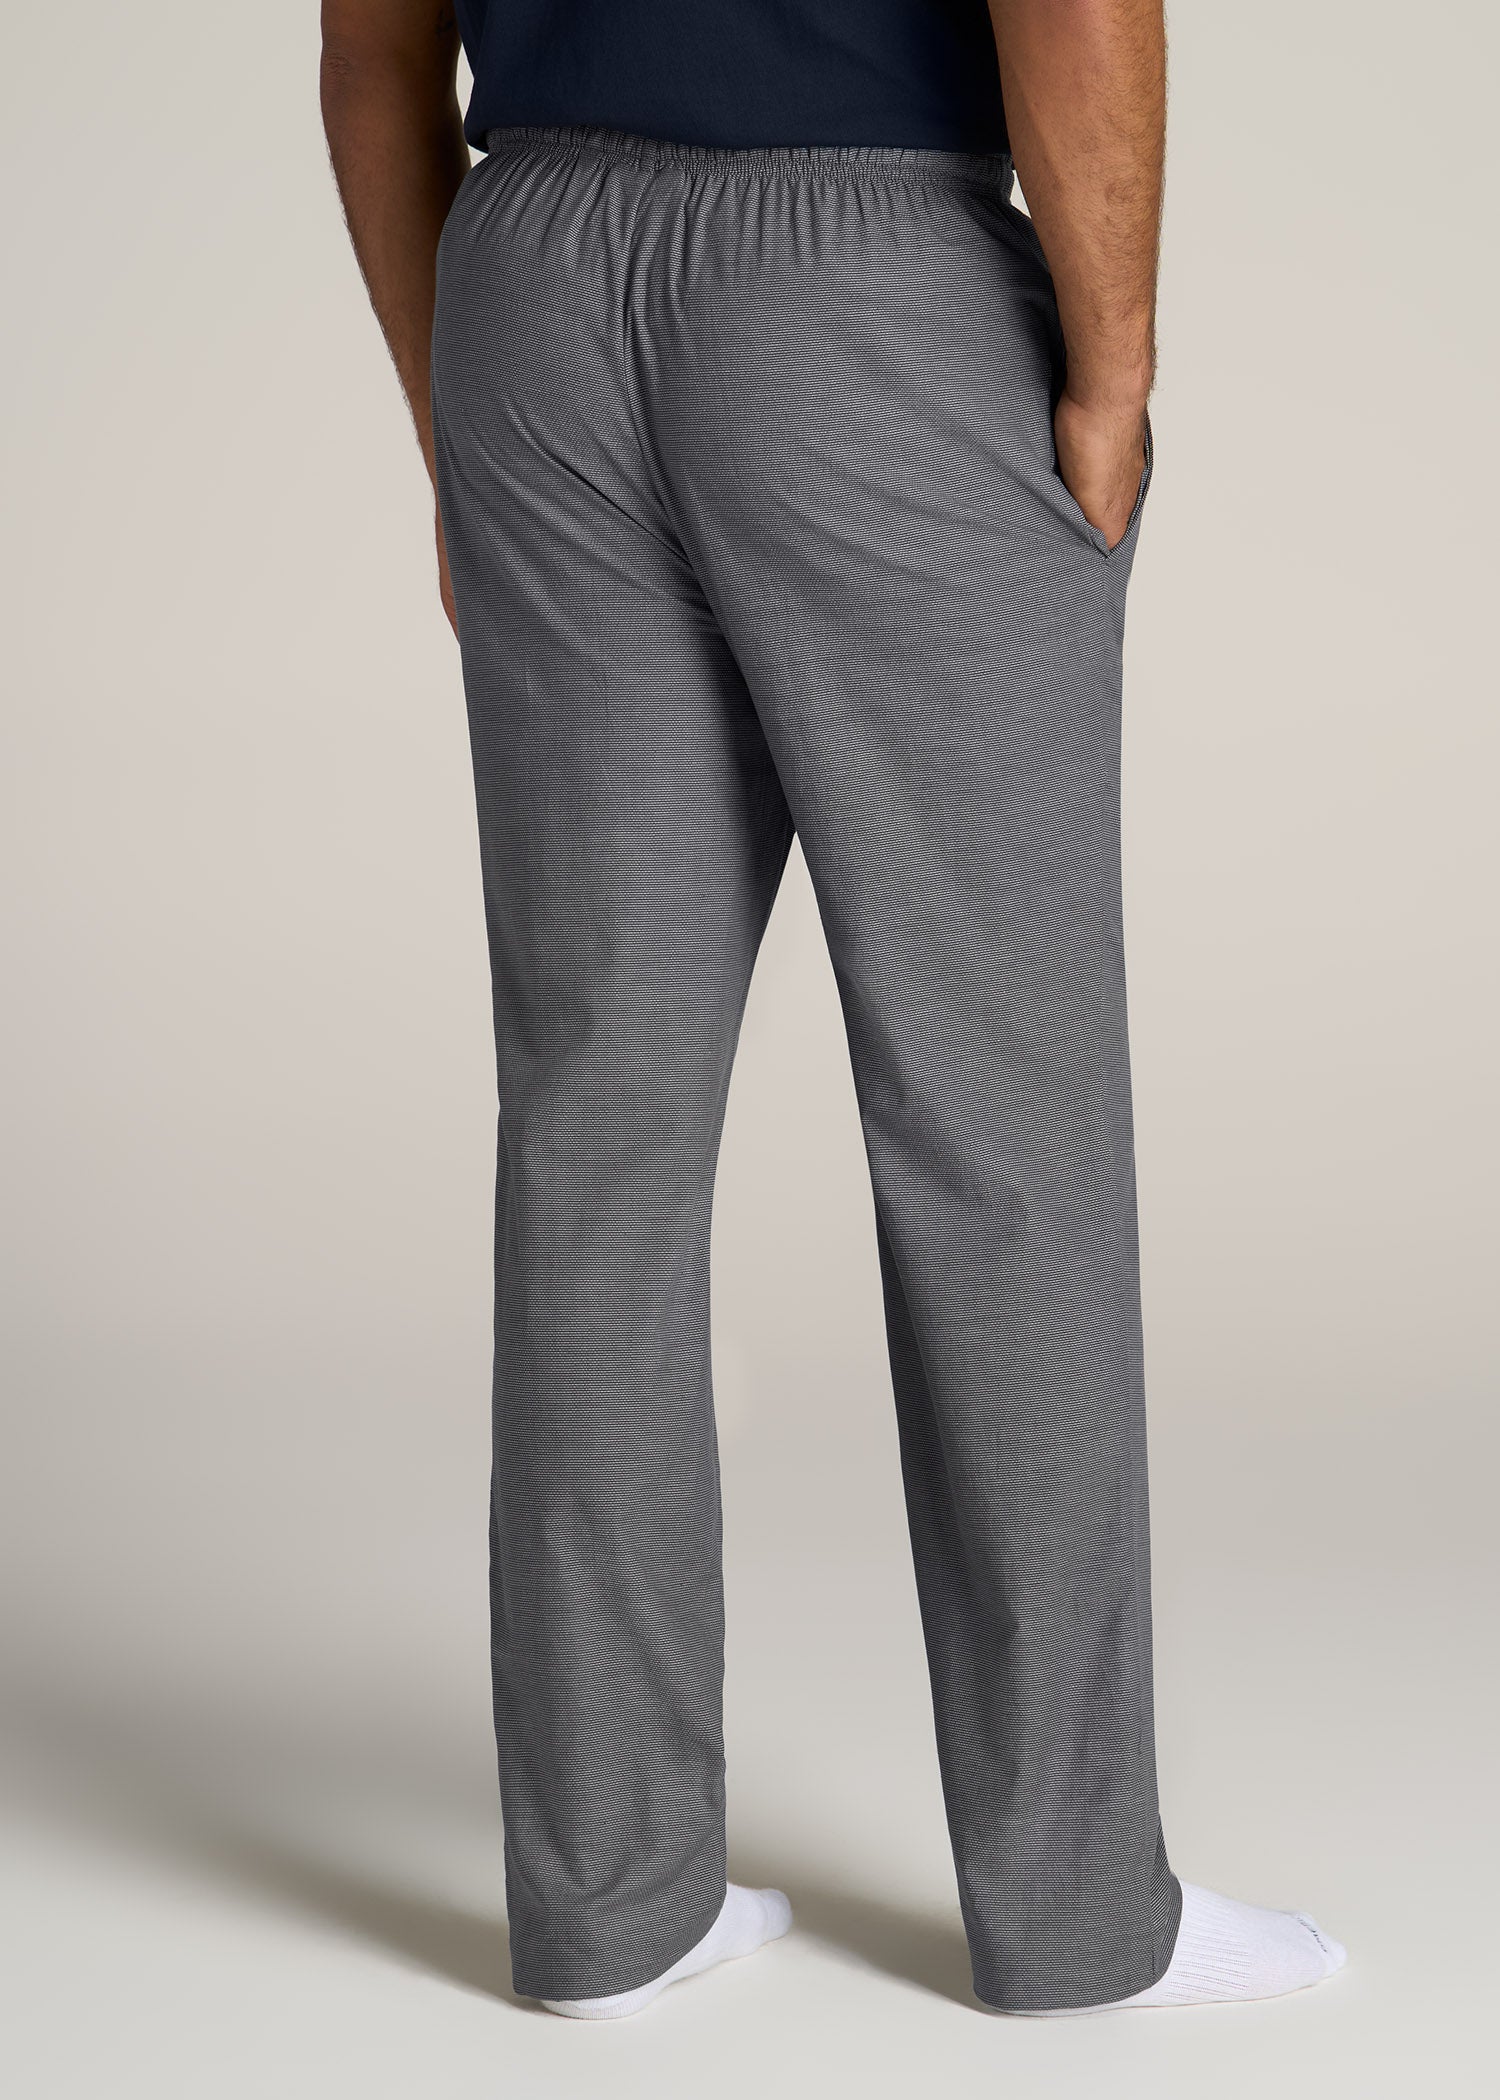 Jockey Men's Baselayer Tall Man Thermocore Pant, Black, 2XLT at Amazon Men's  Clothing store